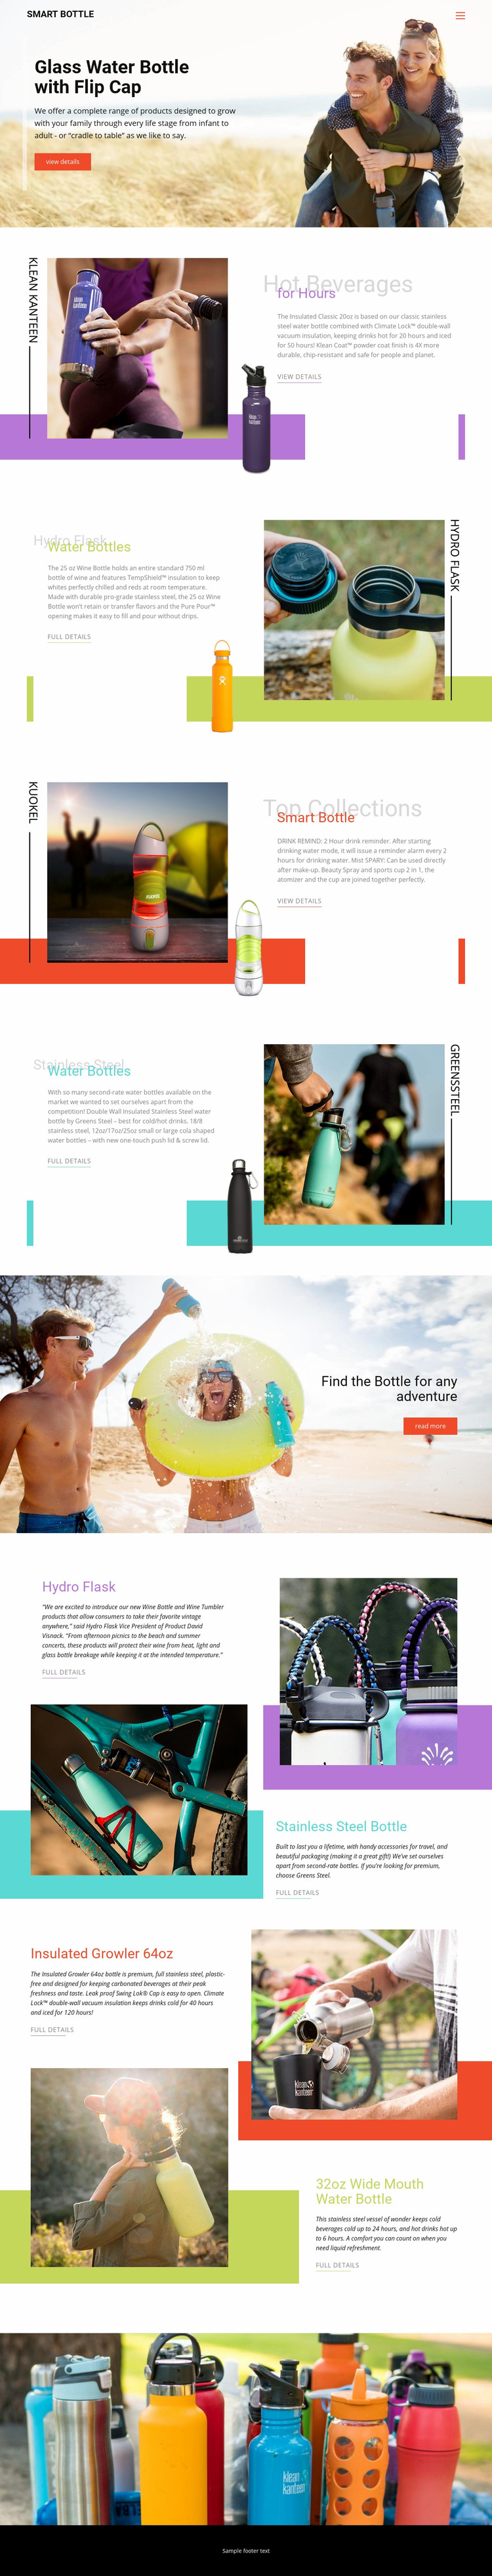 Water Bottles Web Page Design